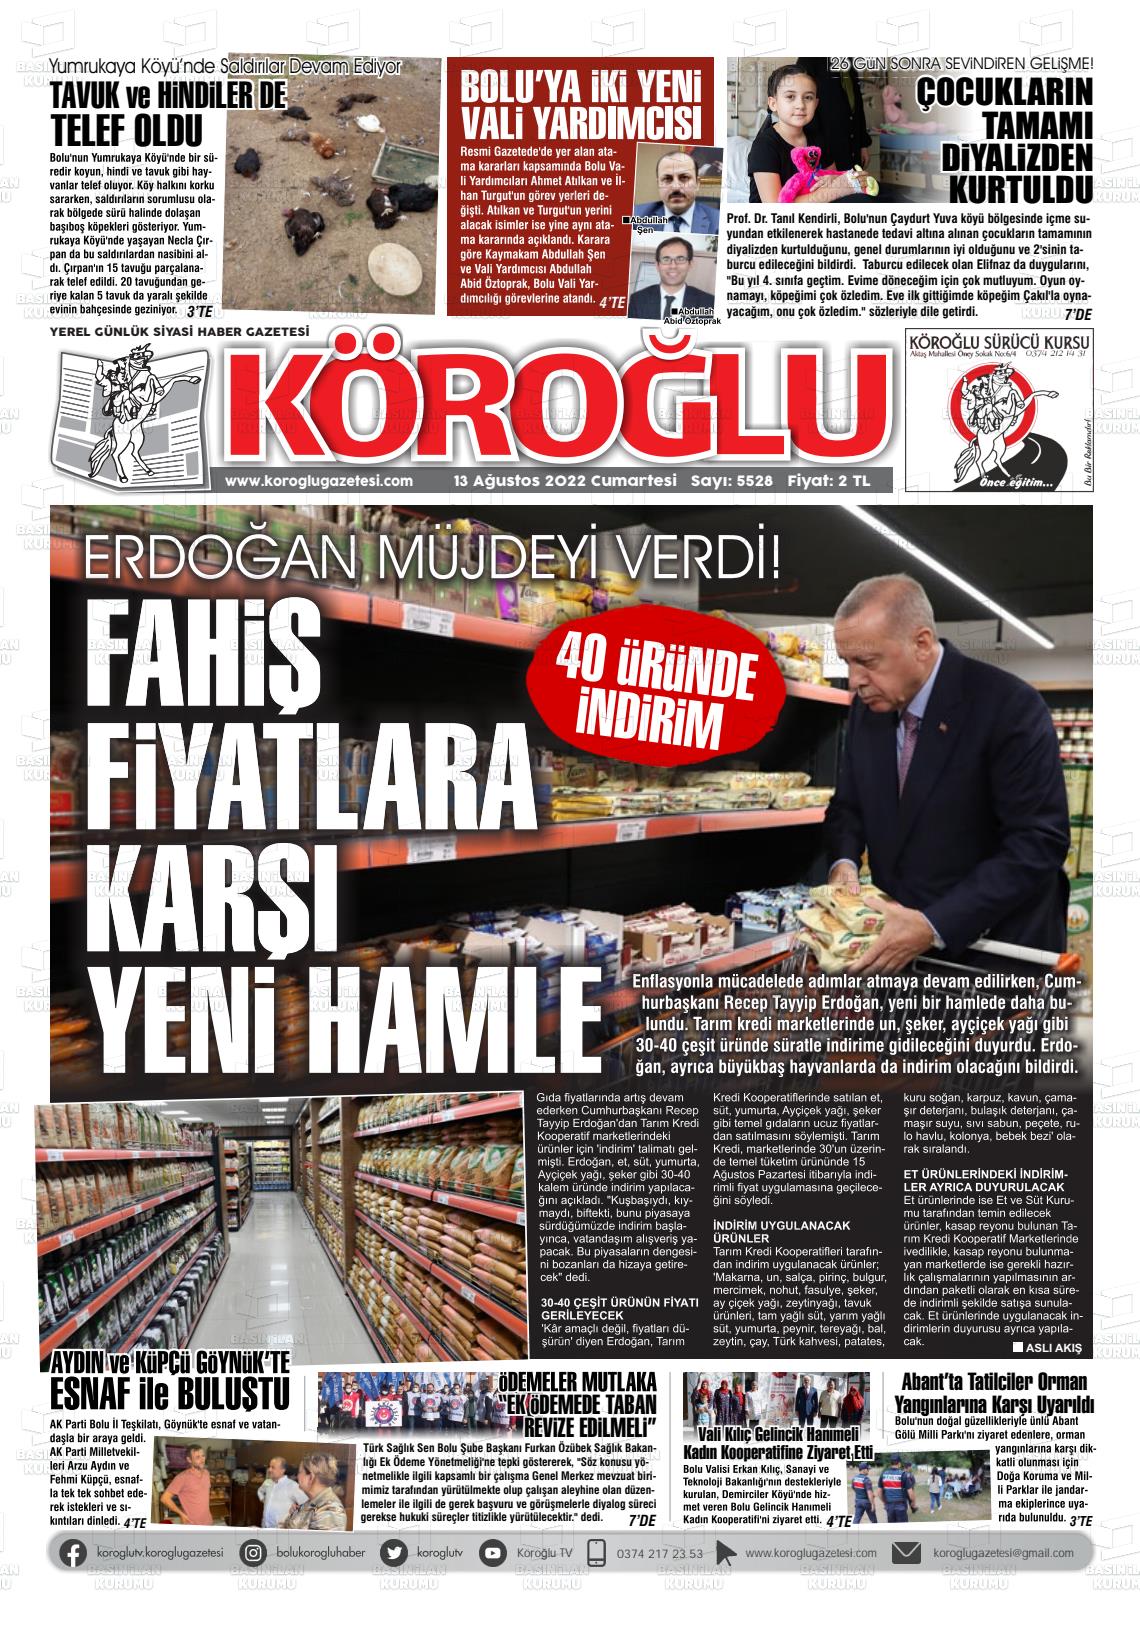 13 Ağustos 2022 Köroğlu Gazete Manşeti